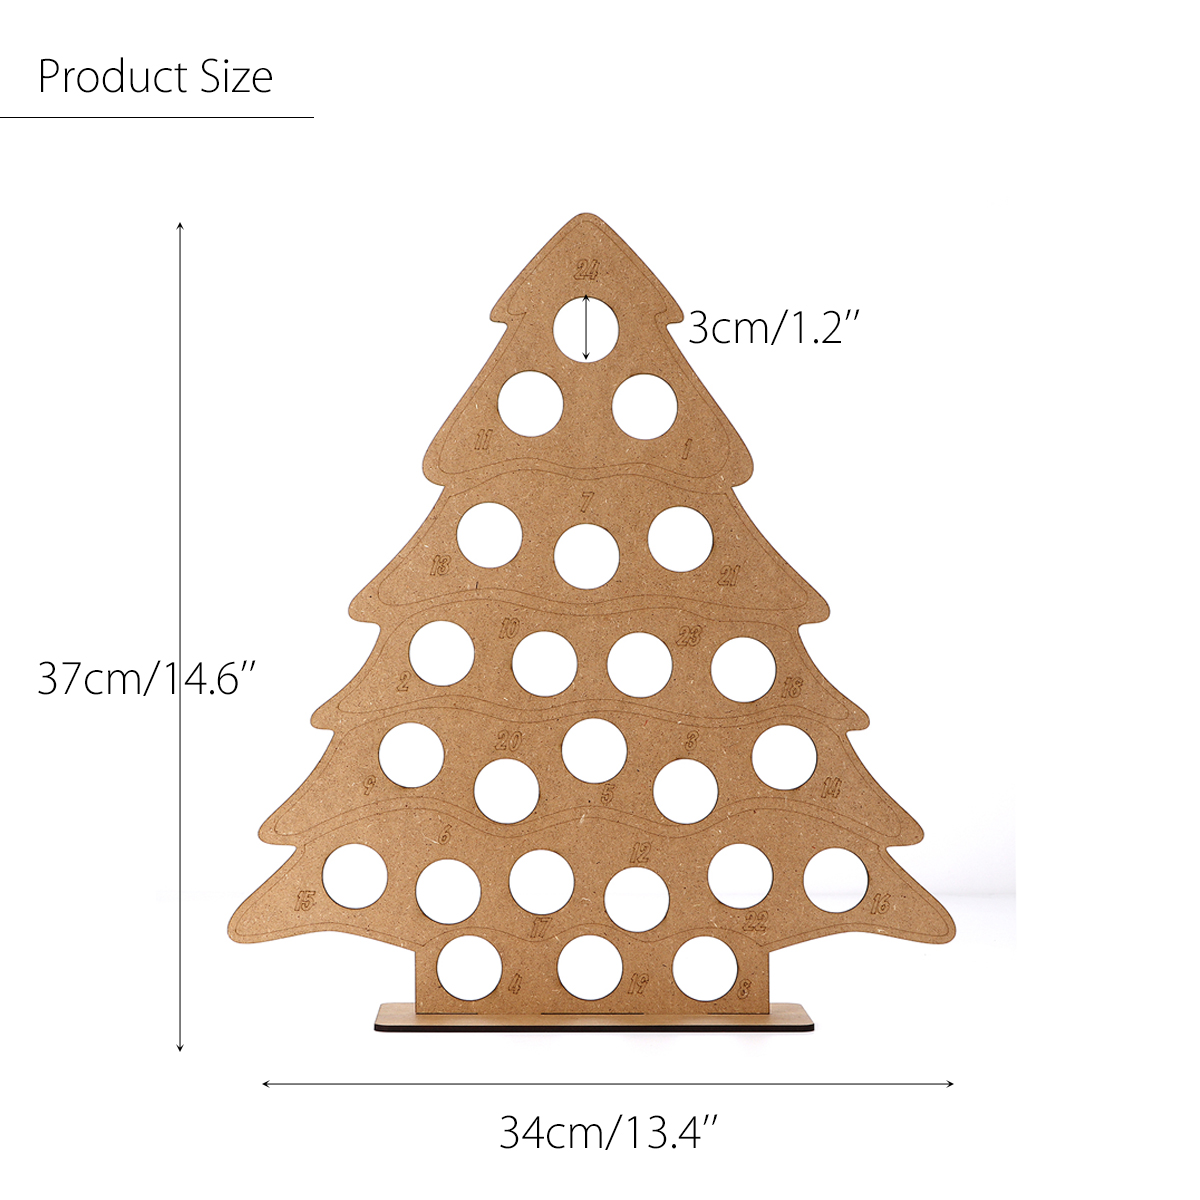 MDF-Wooden-Christmas-Advent-Calendar-Christmas-Tree-Decoration-Fits-24-Circular-Chocolates-Candy-Sta-1587877-4